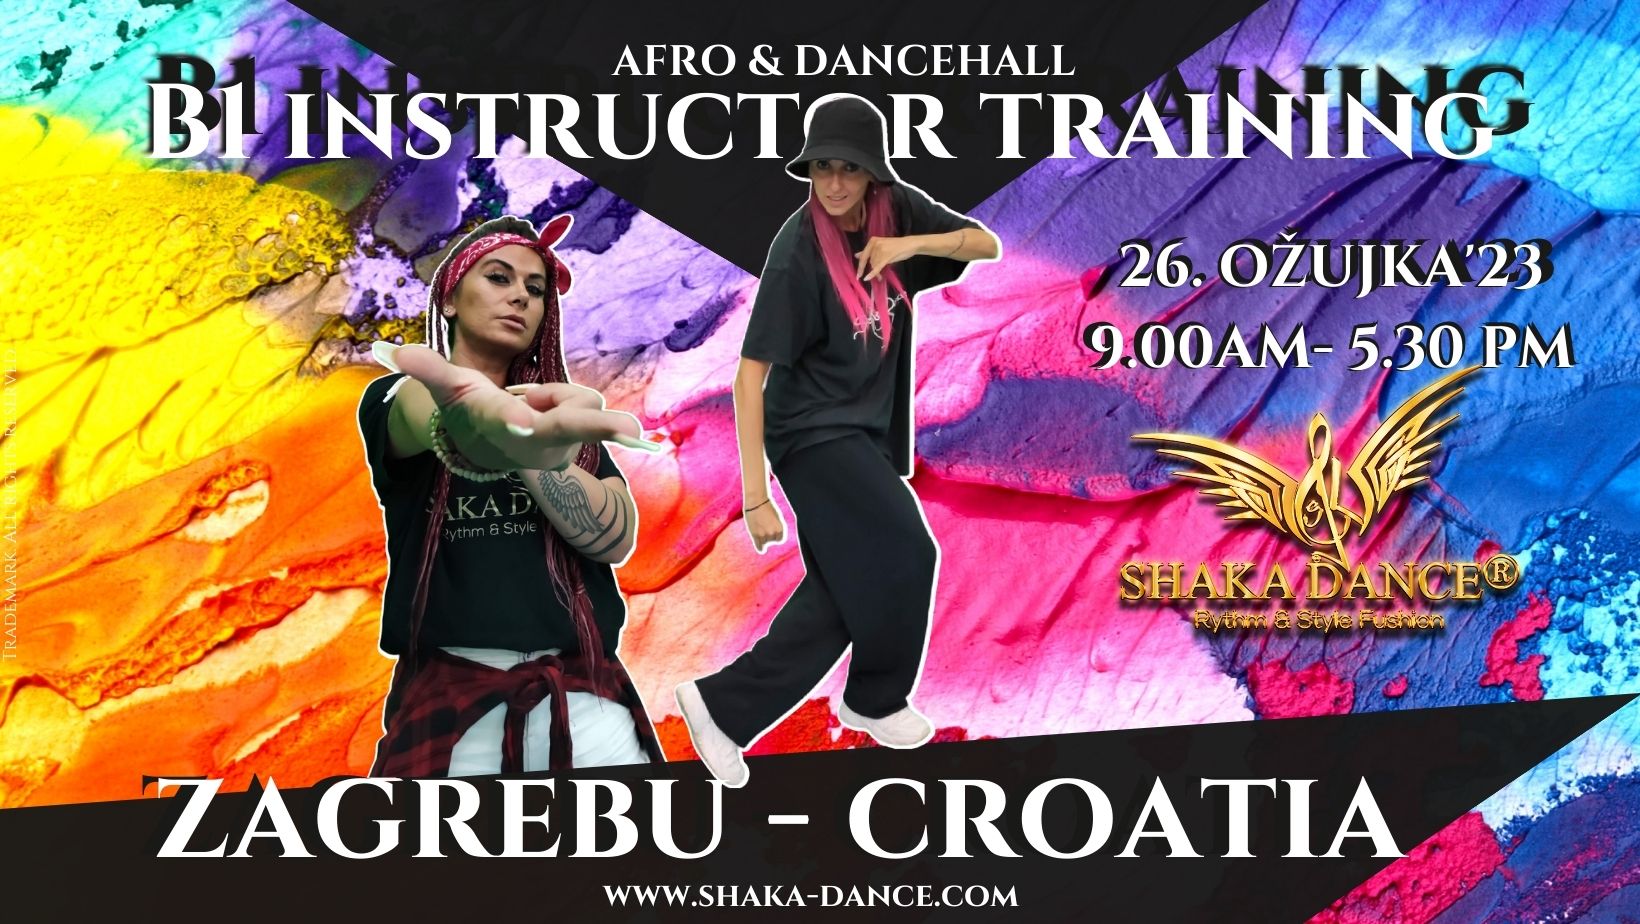 SHAKA DANCE® B1 Instructor Training Zagrebu-Croatia